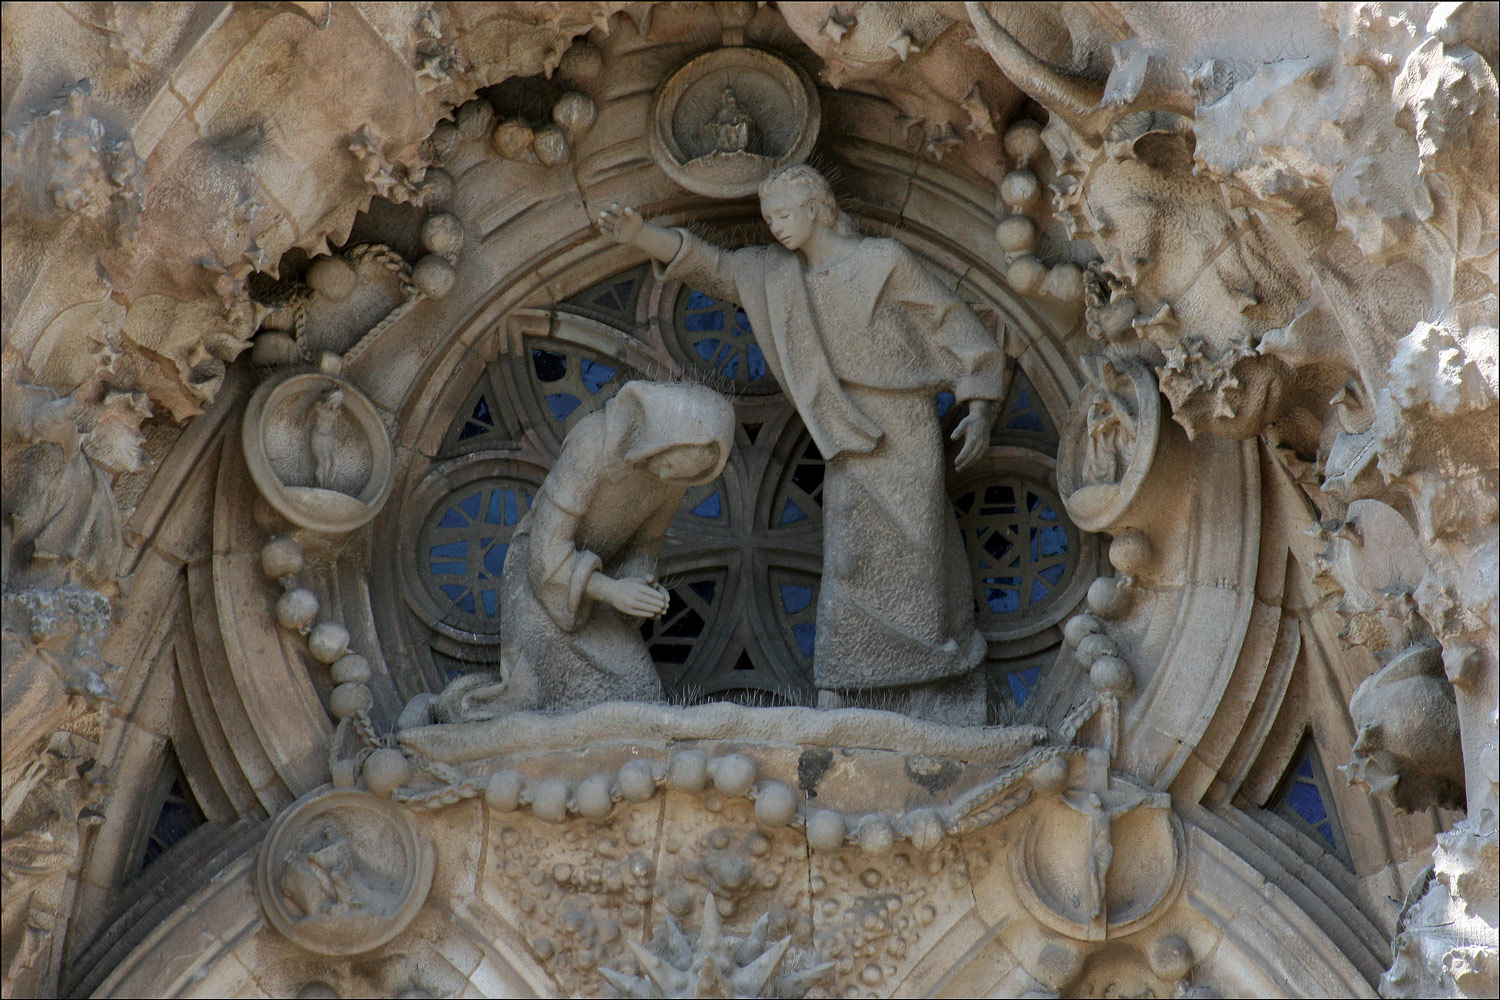 Sagrada Familia by Gaudi - Basilica in Barcelona, Spain - 137 Year Project 99